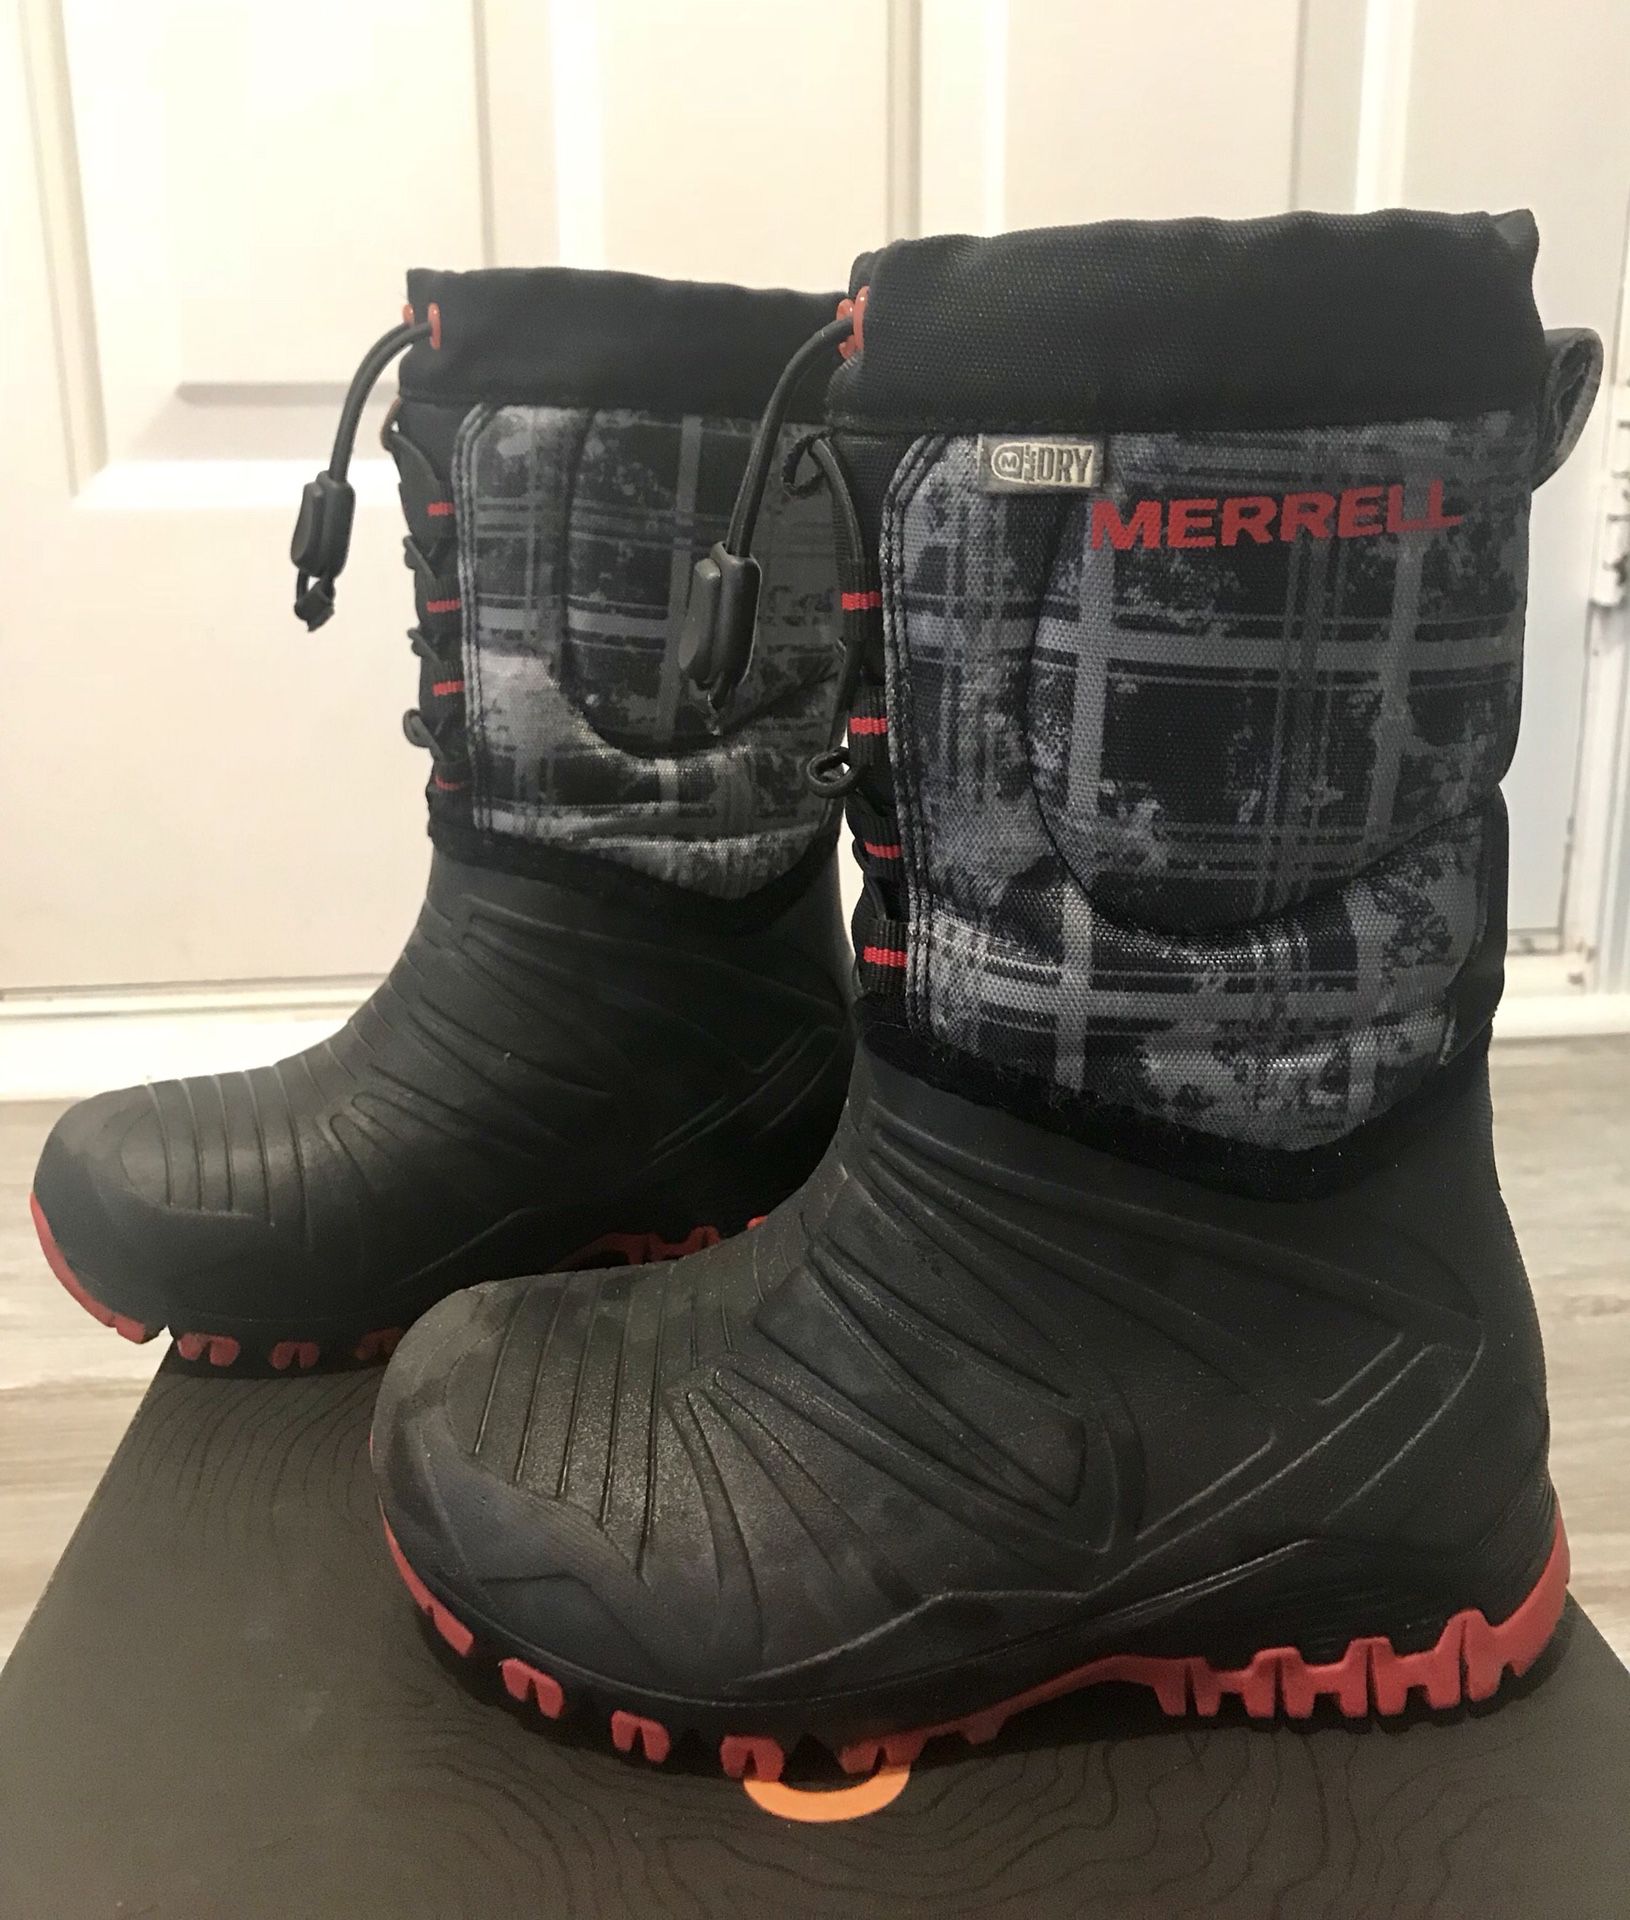 EUC * Merrell Kids Snow Boots size 11